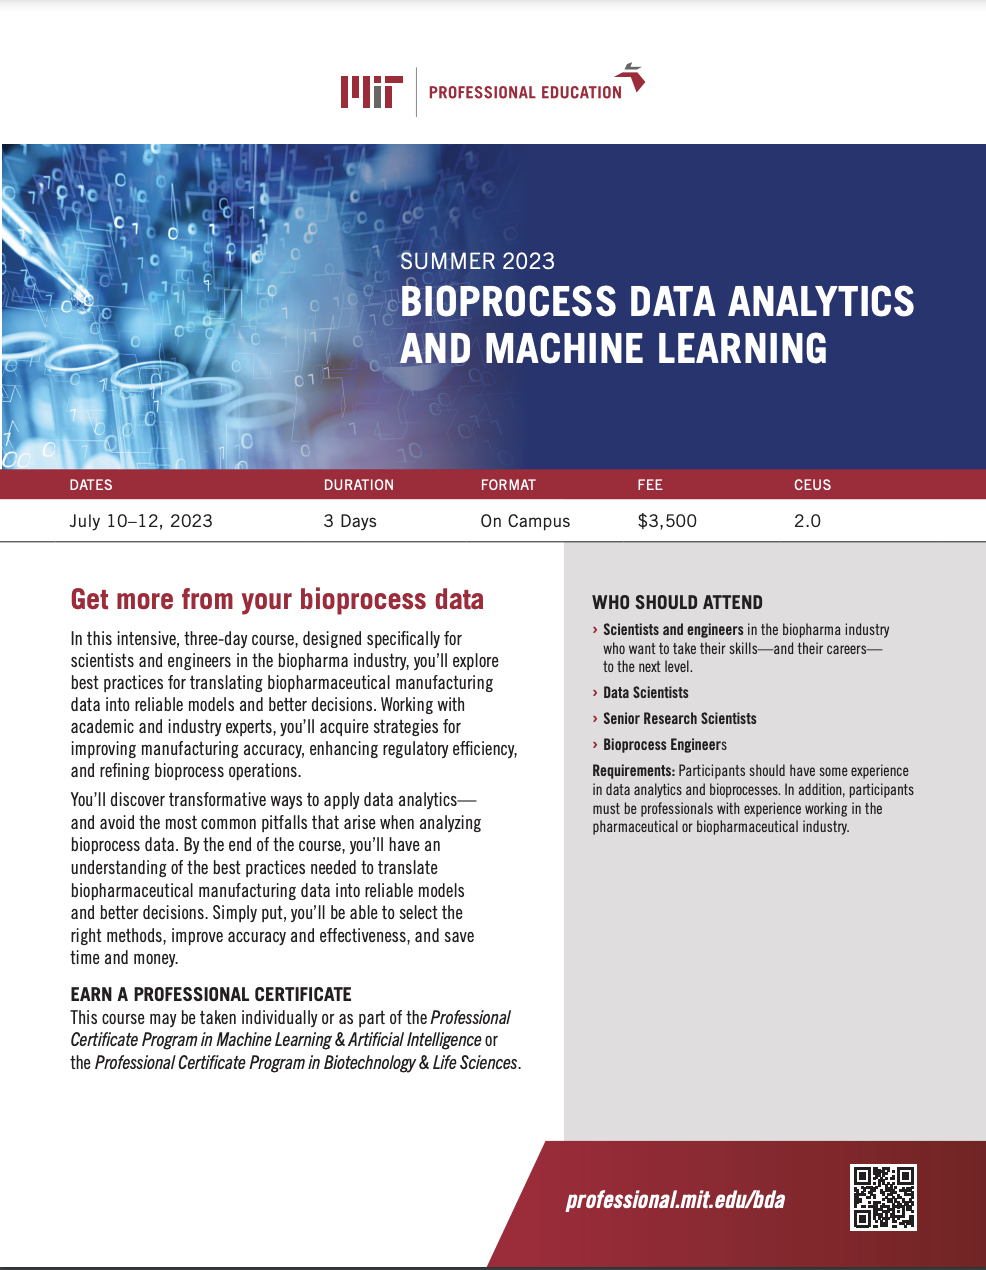 Bioprocess Data Analytics and Machine Learning - Brochure Image